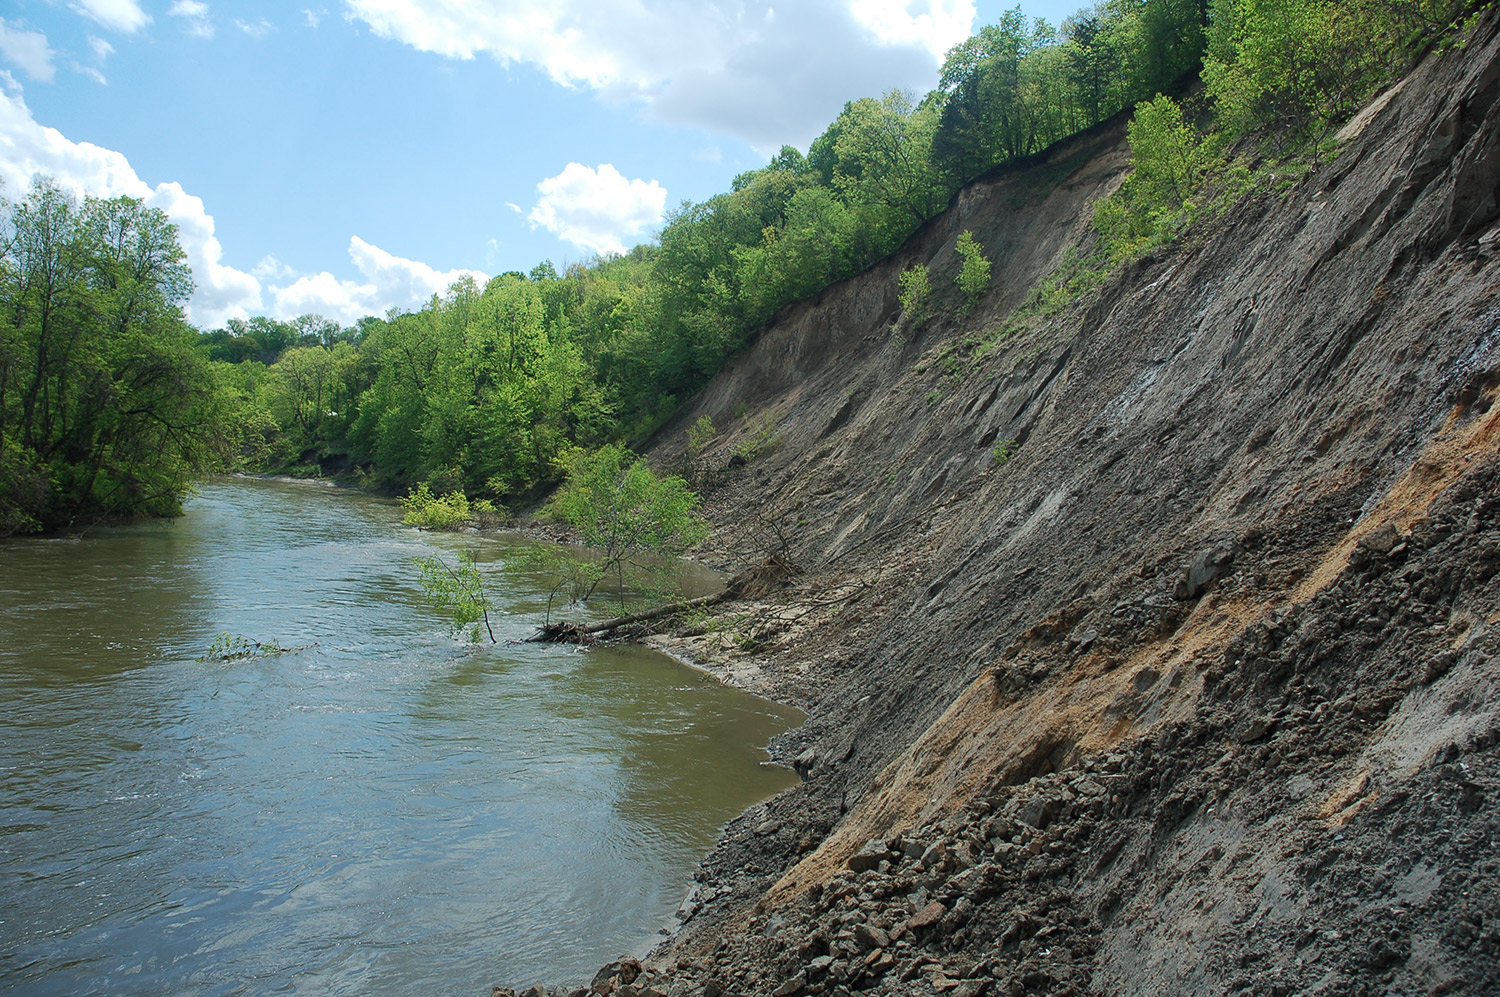 Eroding river bank